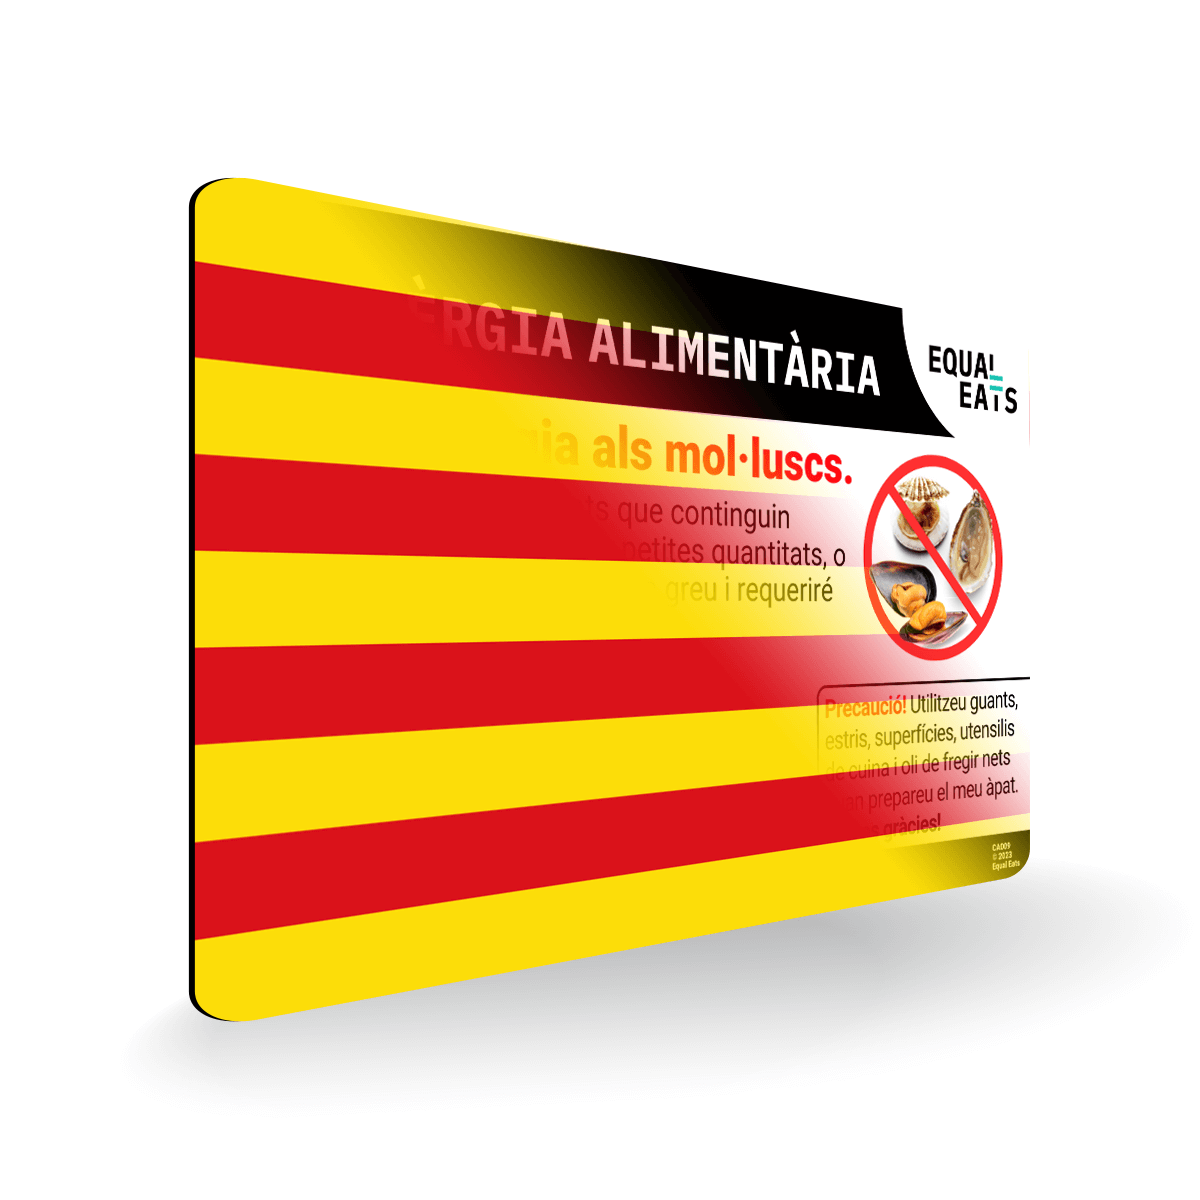 Mollusk Allergy Card in Catalan